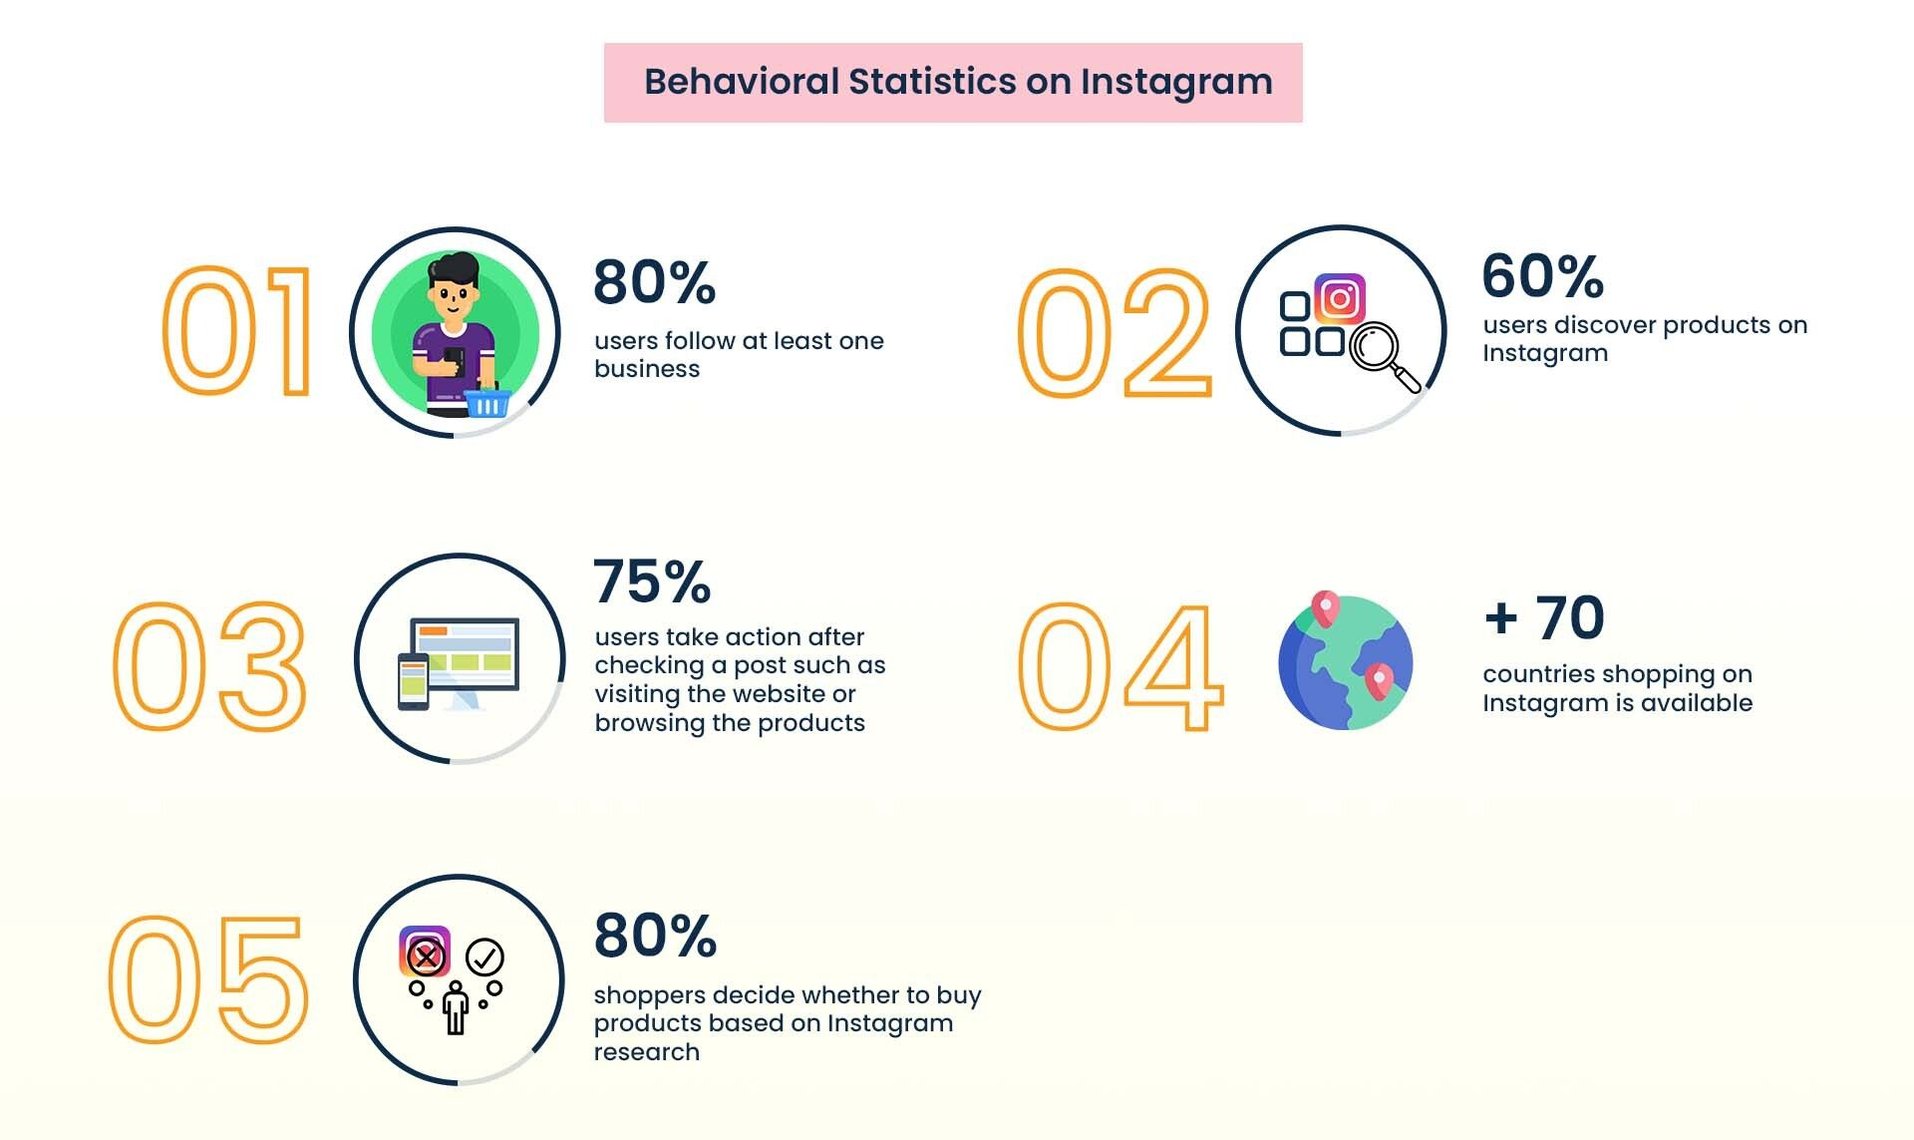 Instagram behavior statistics